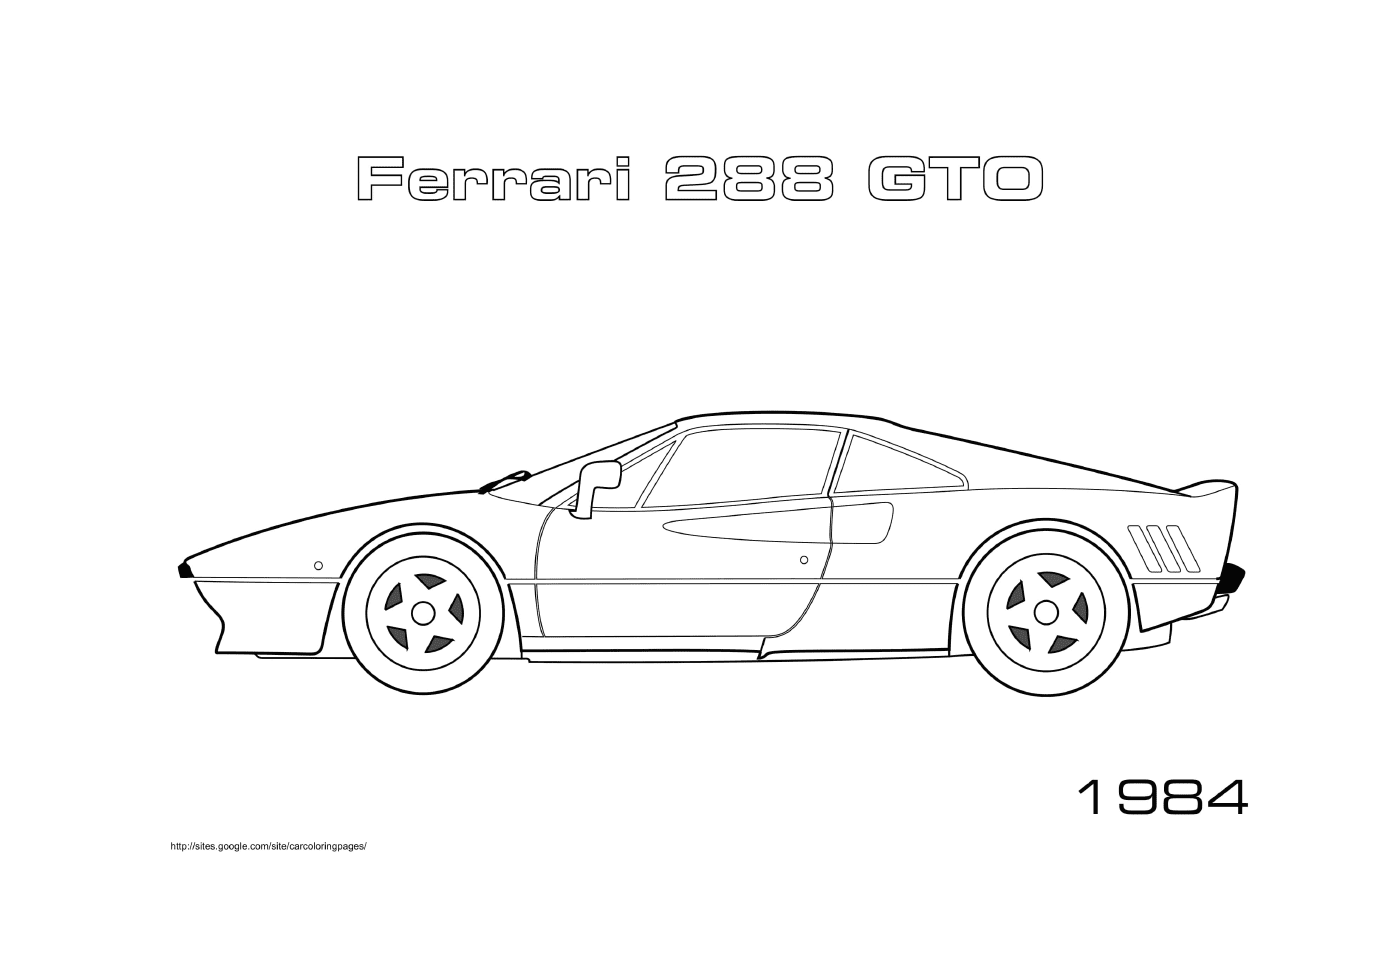   Ferrari 288 Gto de 1984 